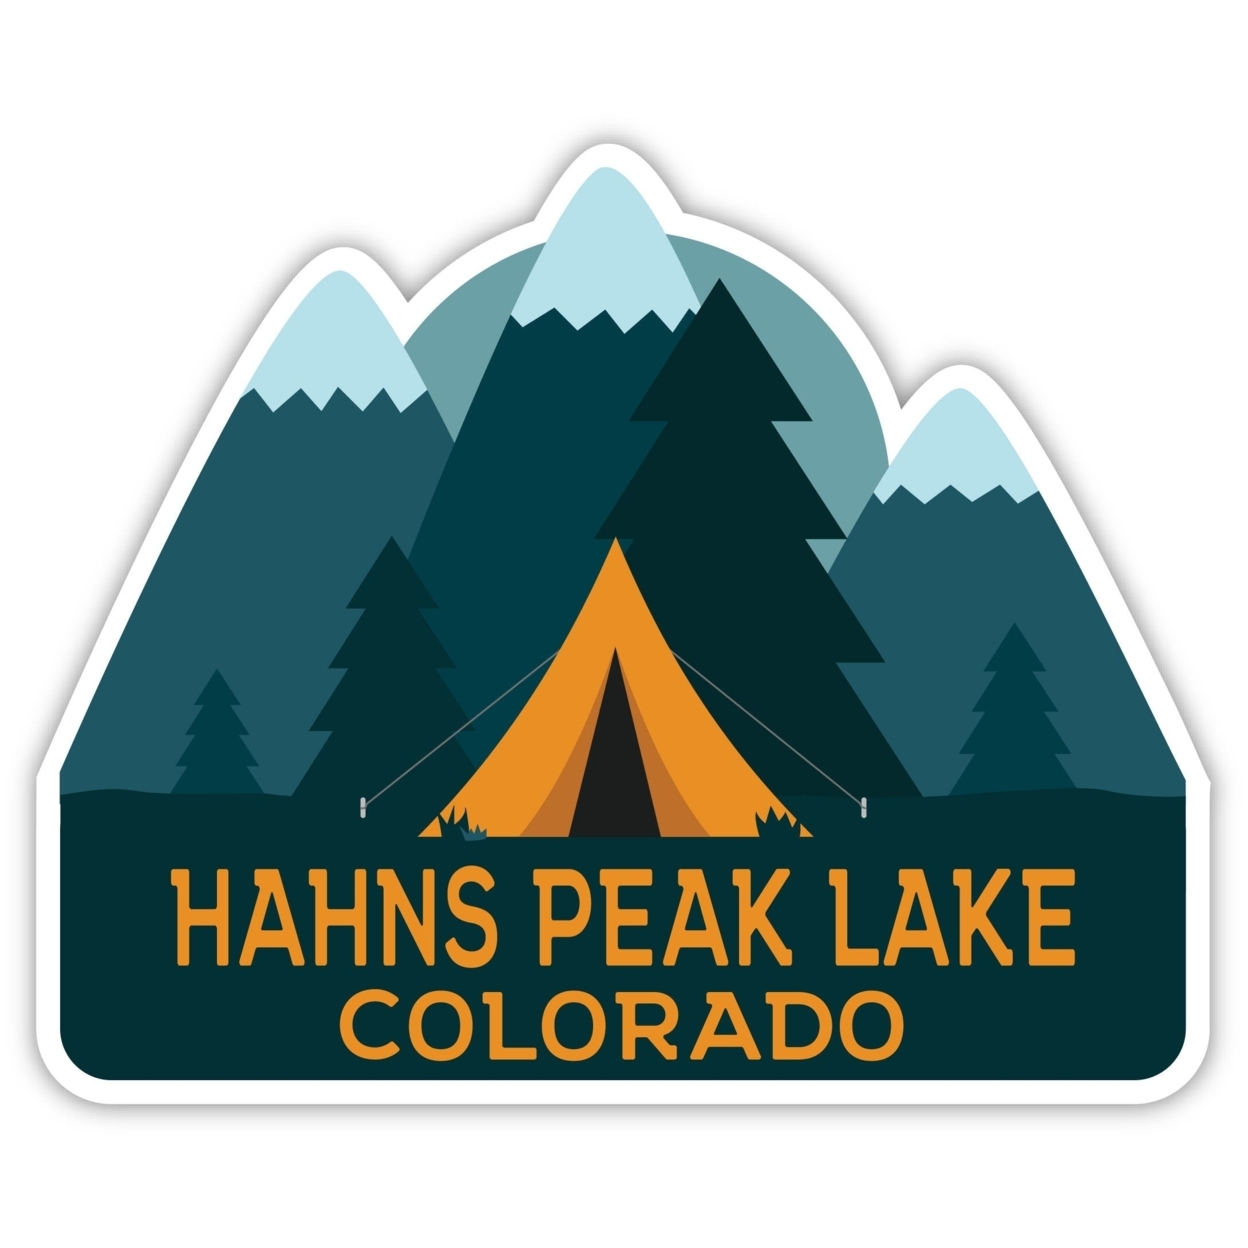 Hahns Peak Lake Colorado Souvenir Decorative Stickers (Choose Theme And Size) - Single Unit, 6-Inch, Tent